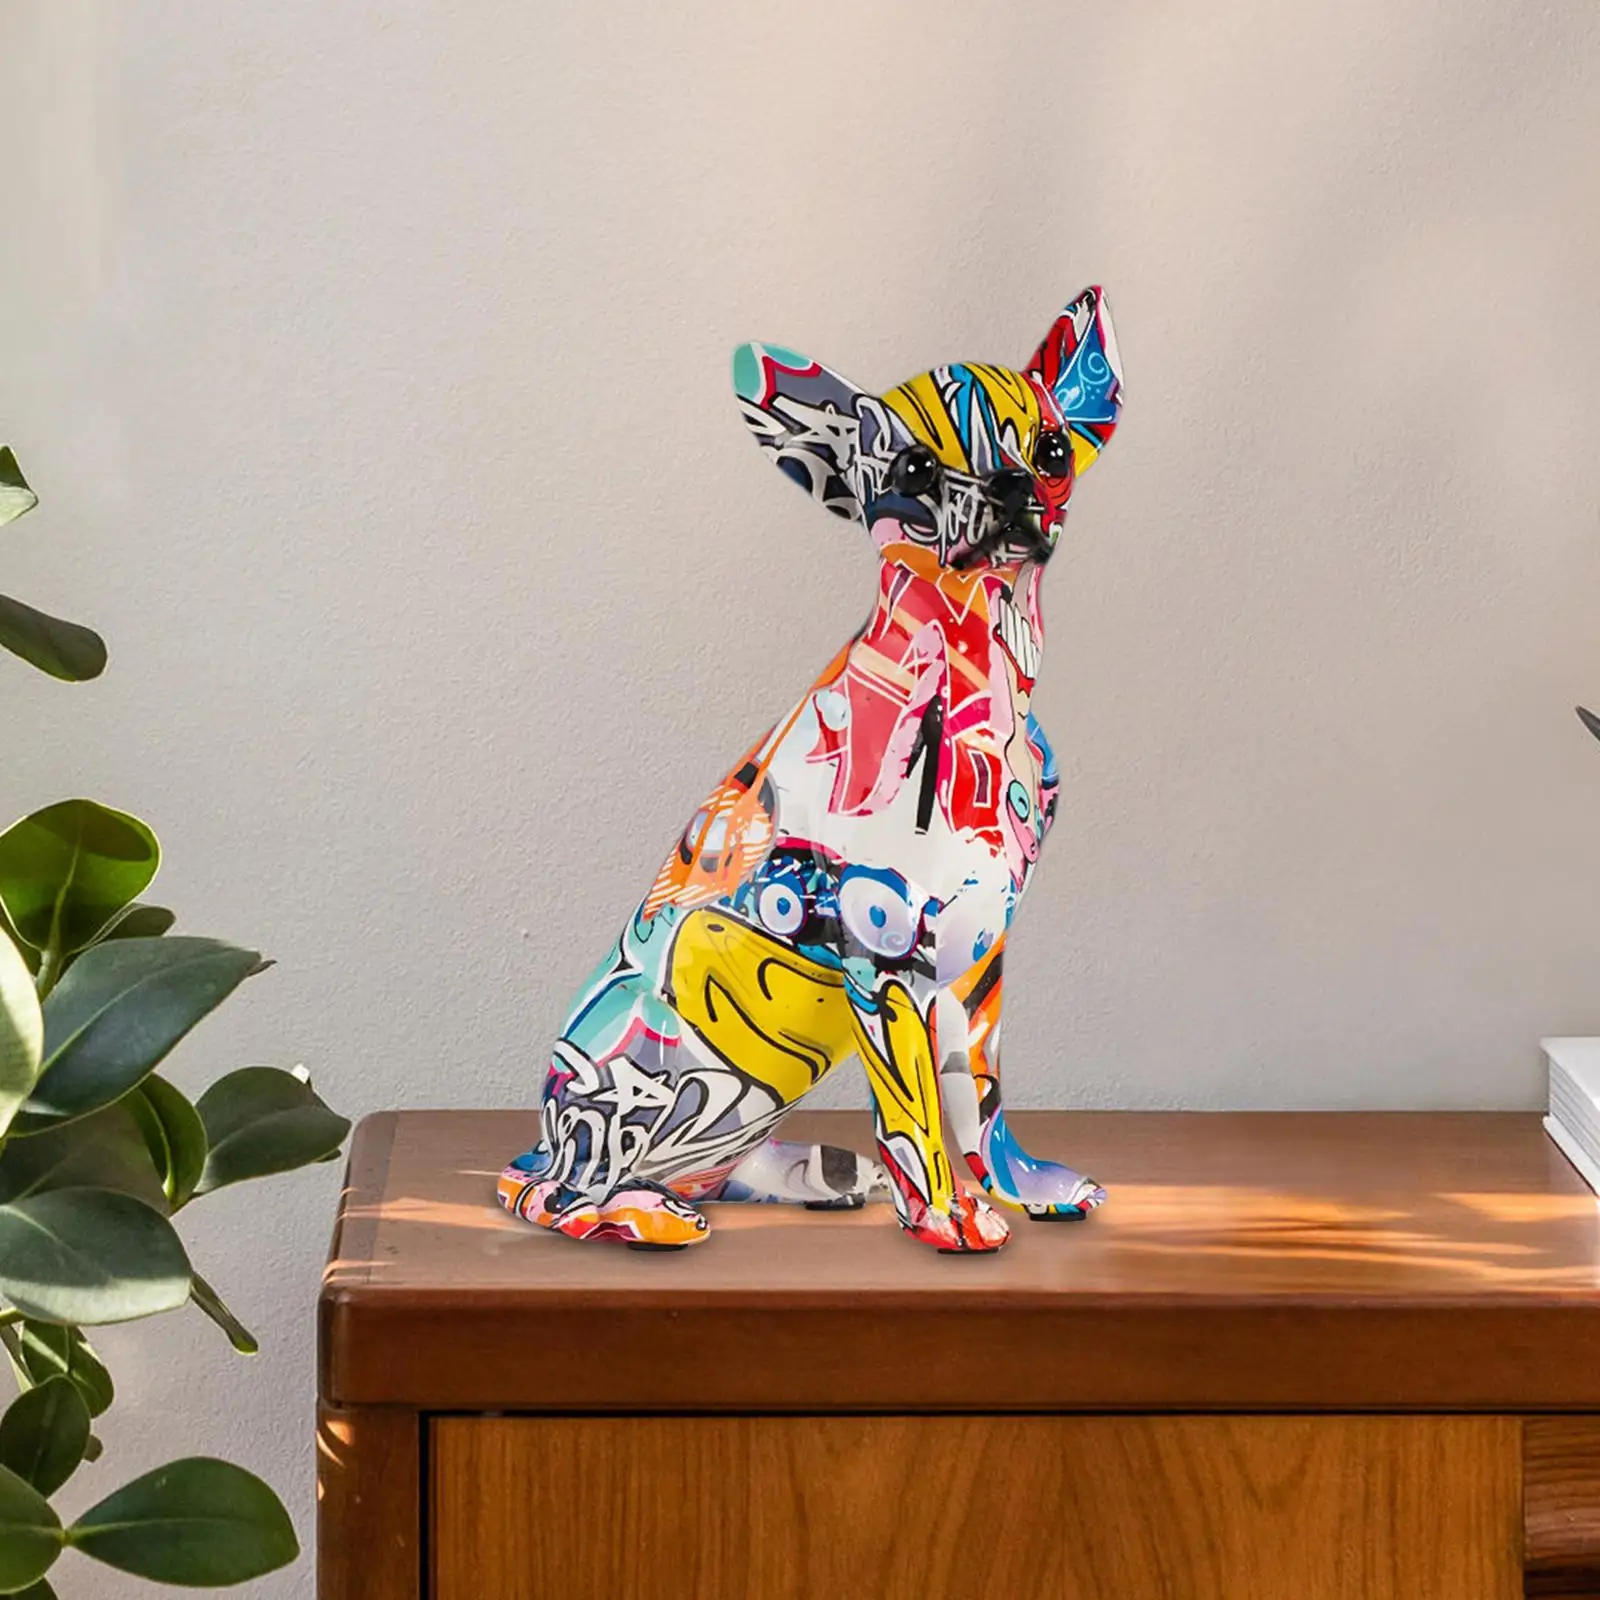 Creative Dog Figurine Decorative Decor Ornaments Colorful Sculpture for Outdoor Restaurant Desktop Housewarming Gifts